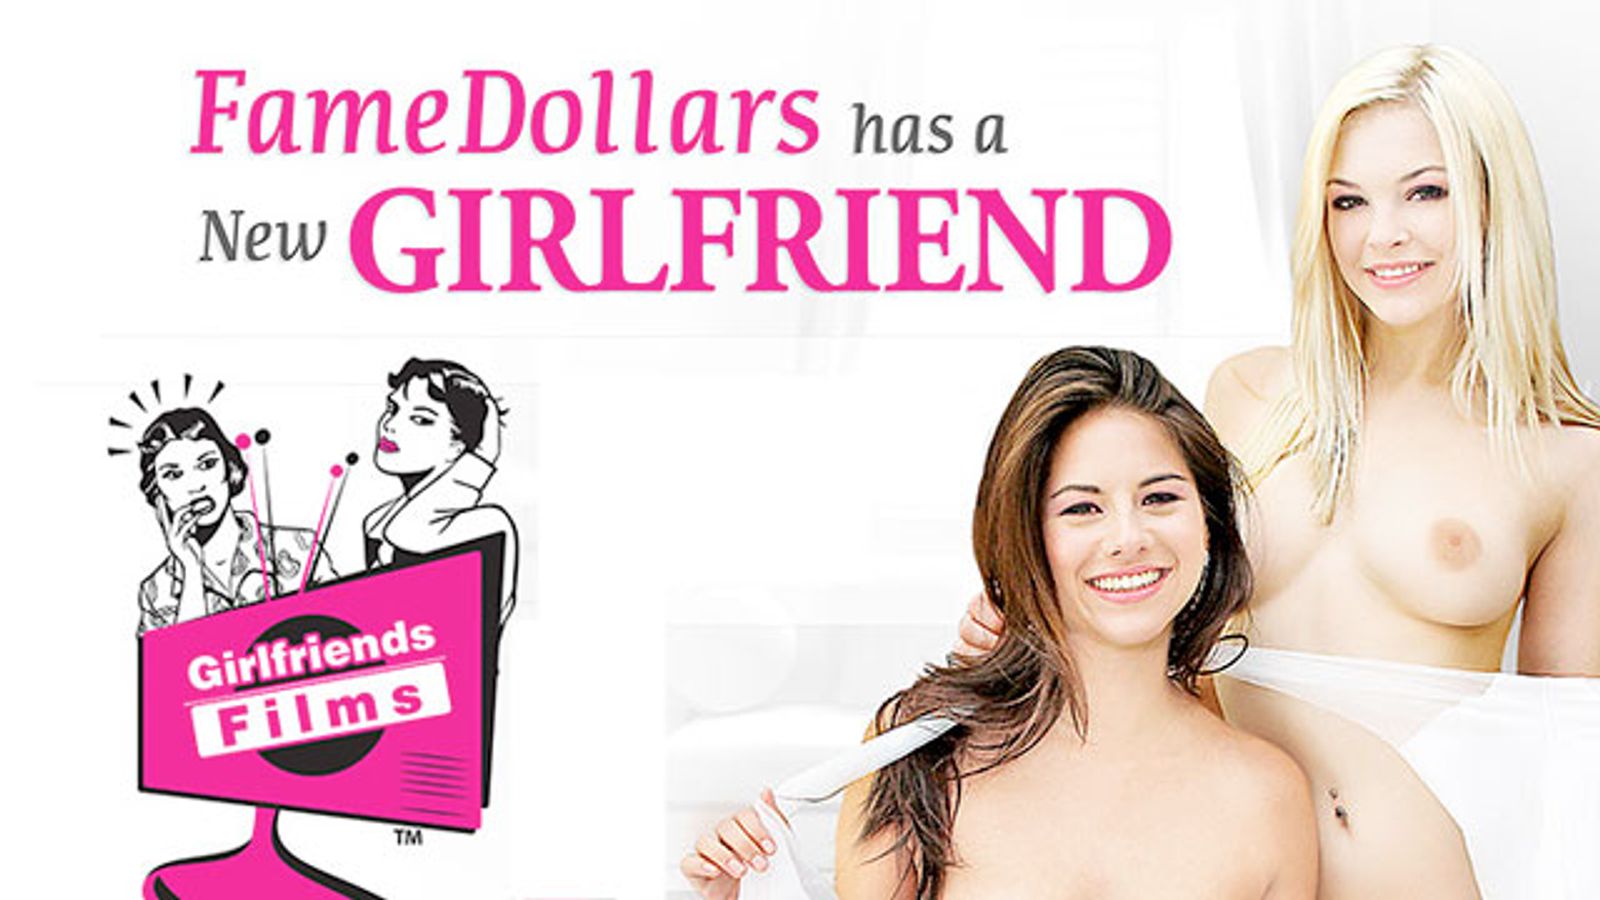 Girlfriends Films Teams With FameDollars on Site, Affiliate Program